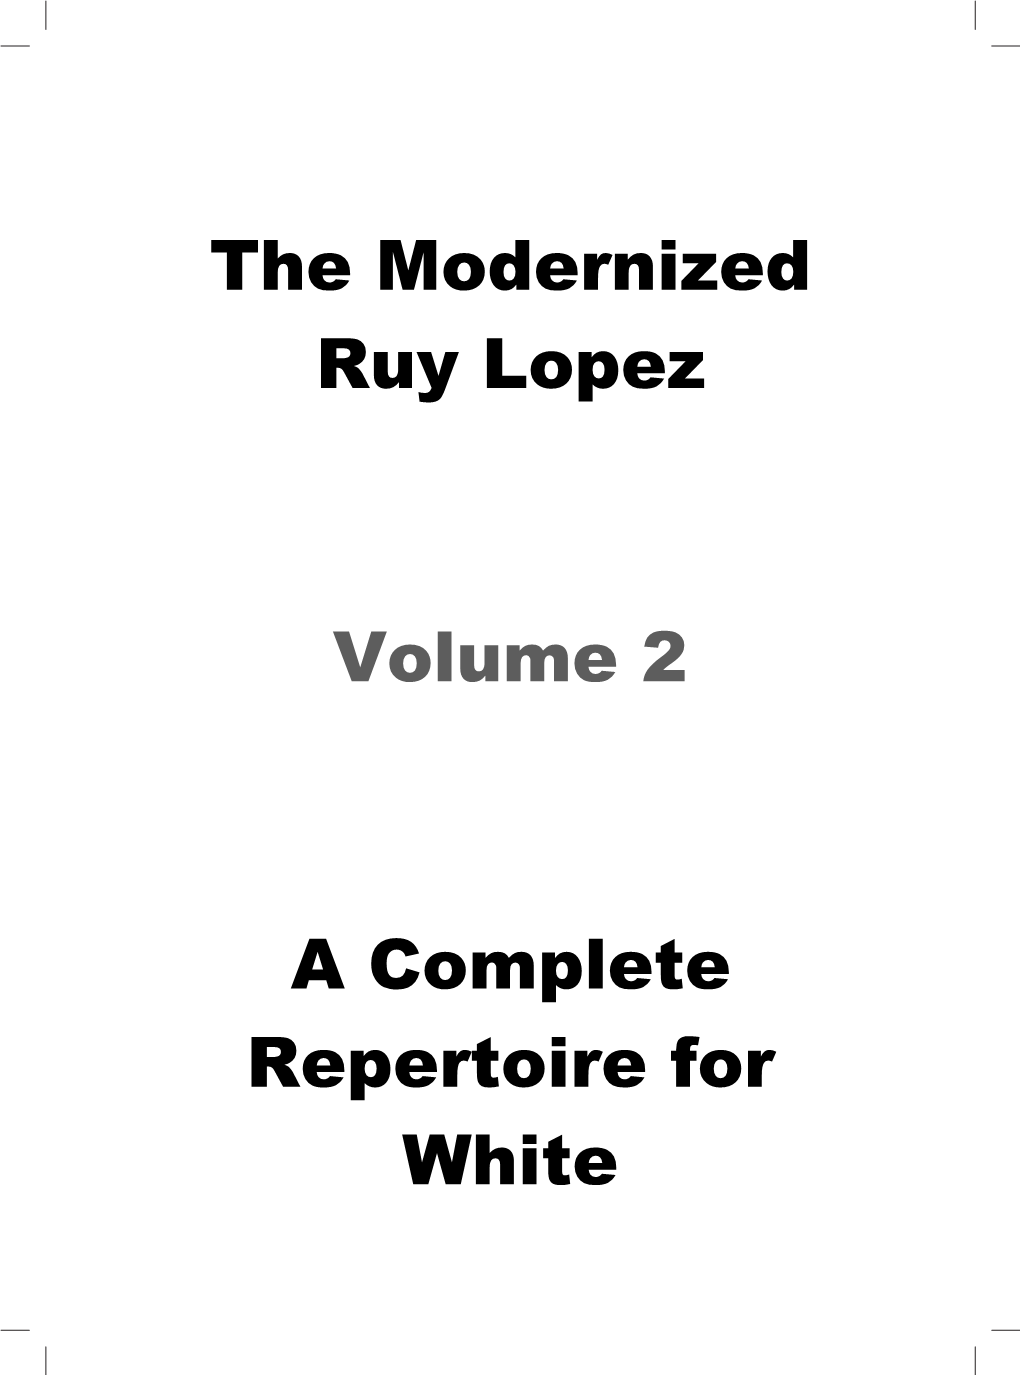 The Modernized Ruy Lopez